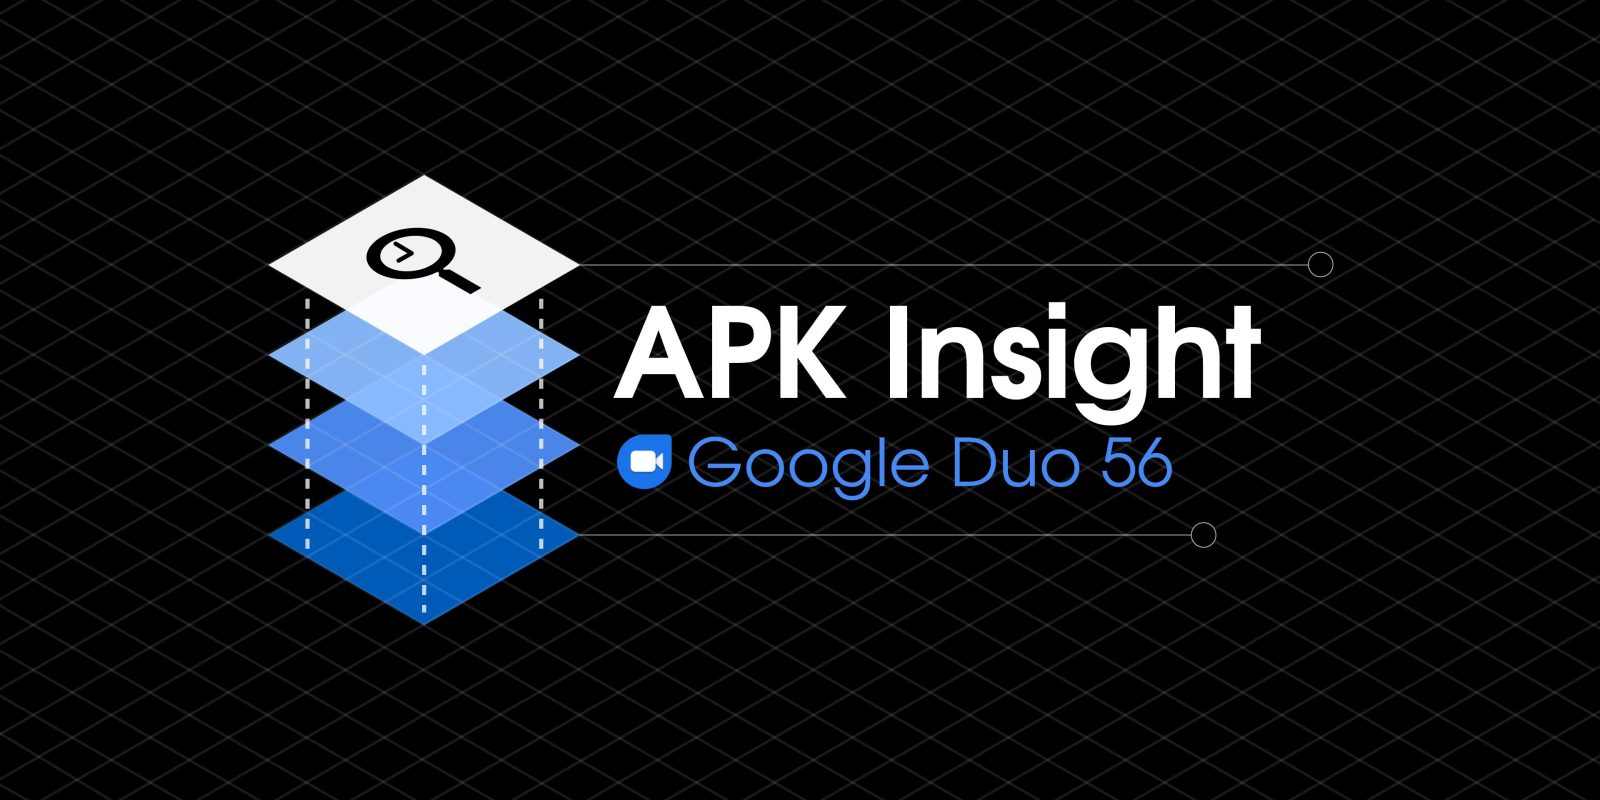 Google Duo 56